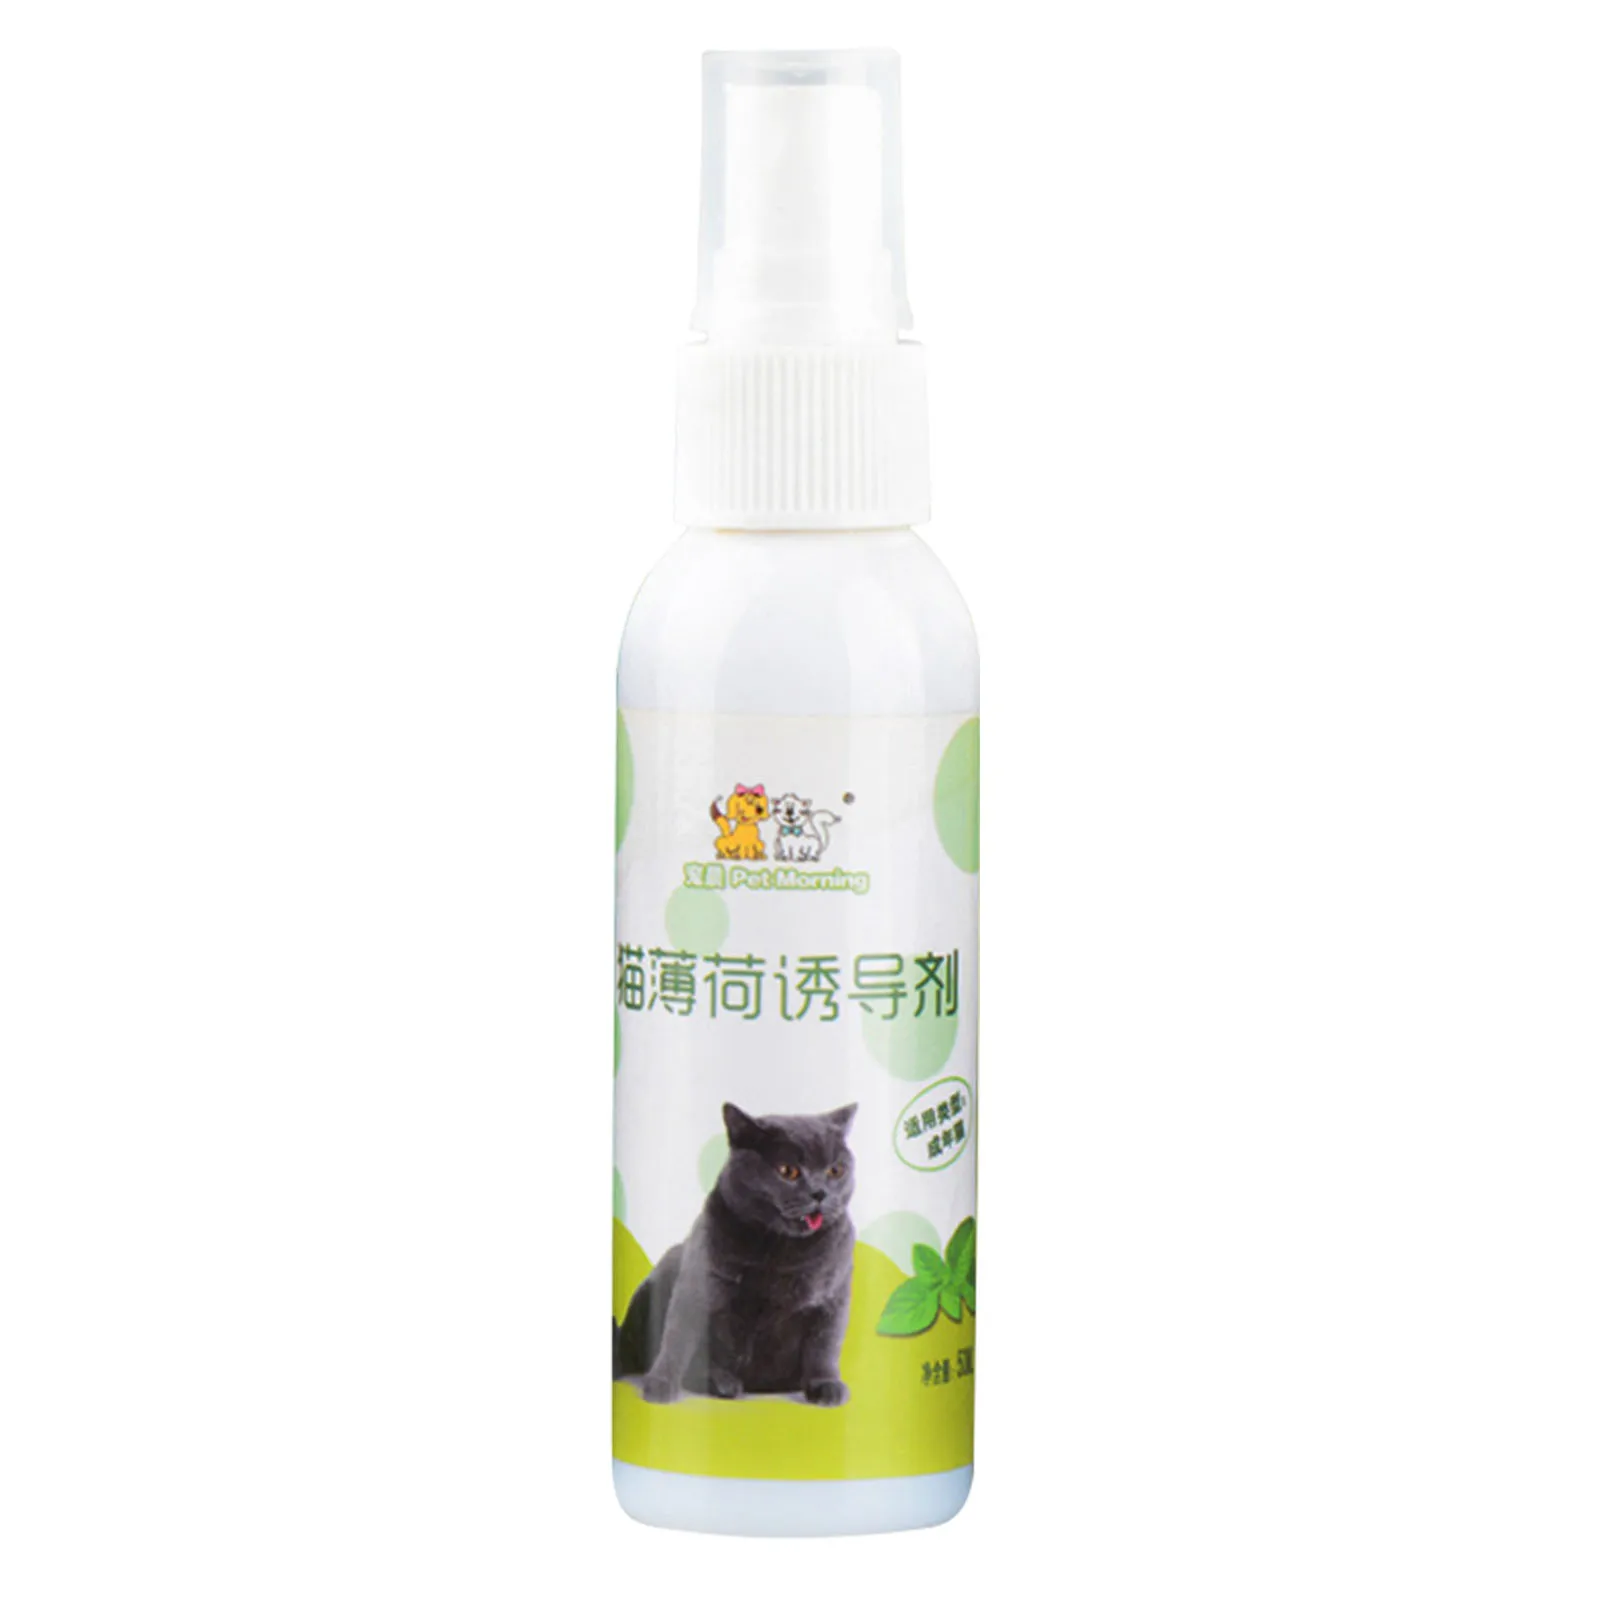 

Cat Catnip Spray Pure Natural & Organic Kittens Cats Catnip Spray For Training Toys Great For Training Redirecting Bad Behaviors